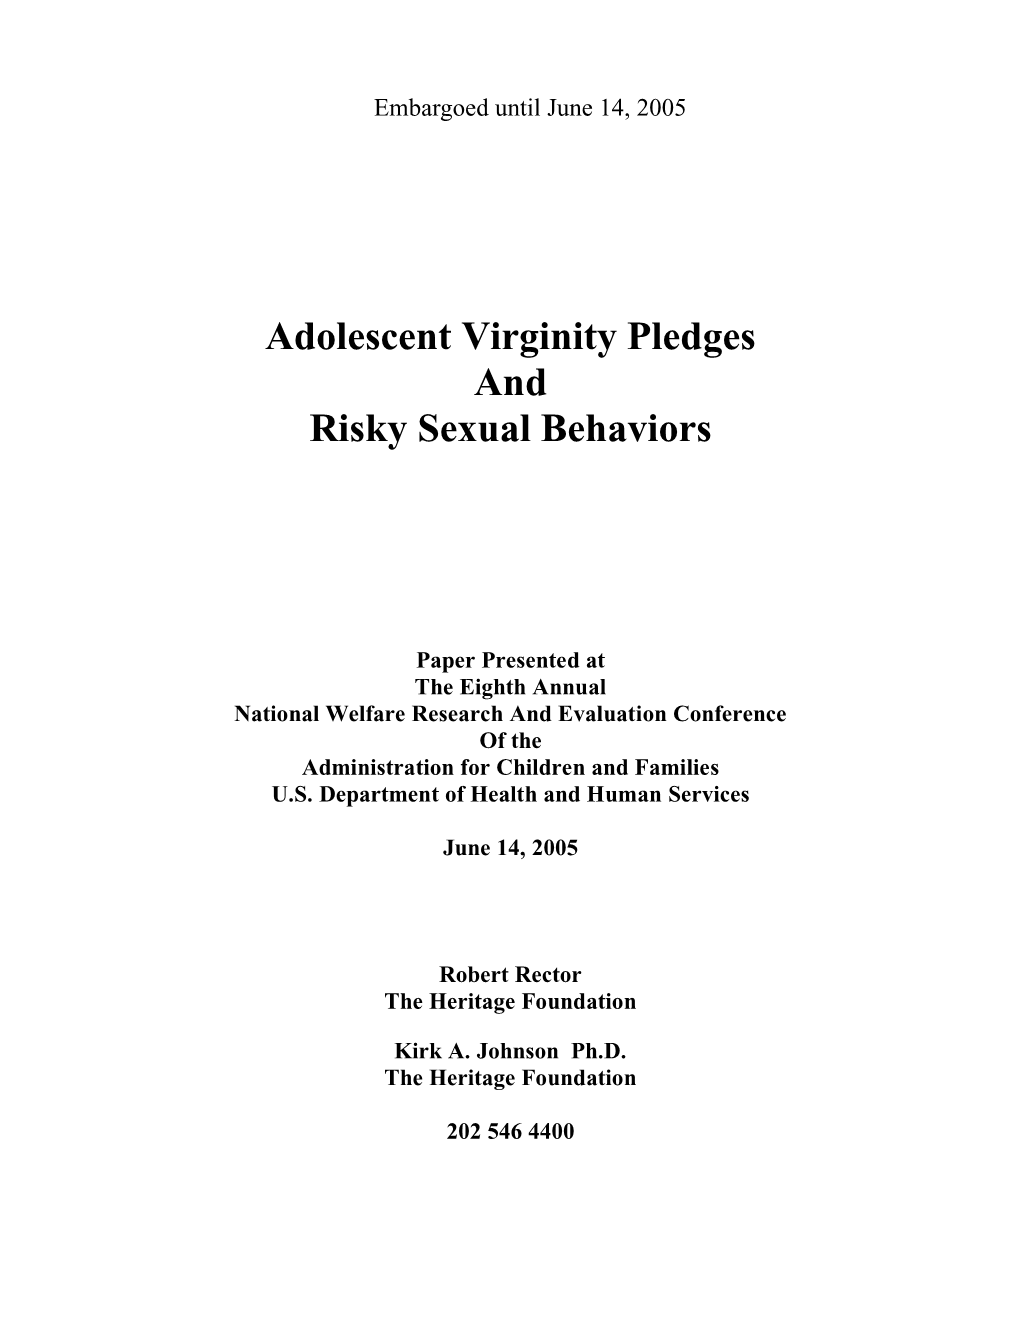 Adolescent Virginity Pledges and Risky Sexual Behaviors